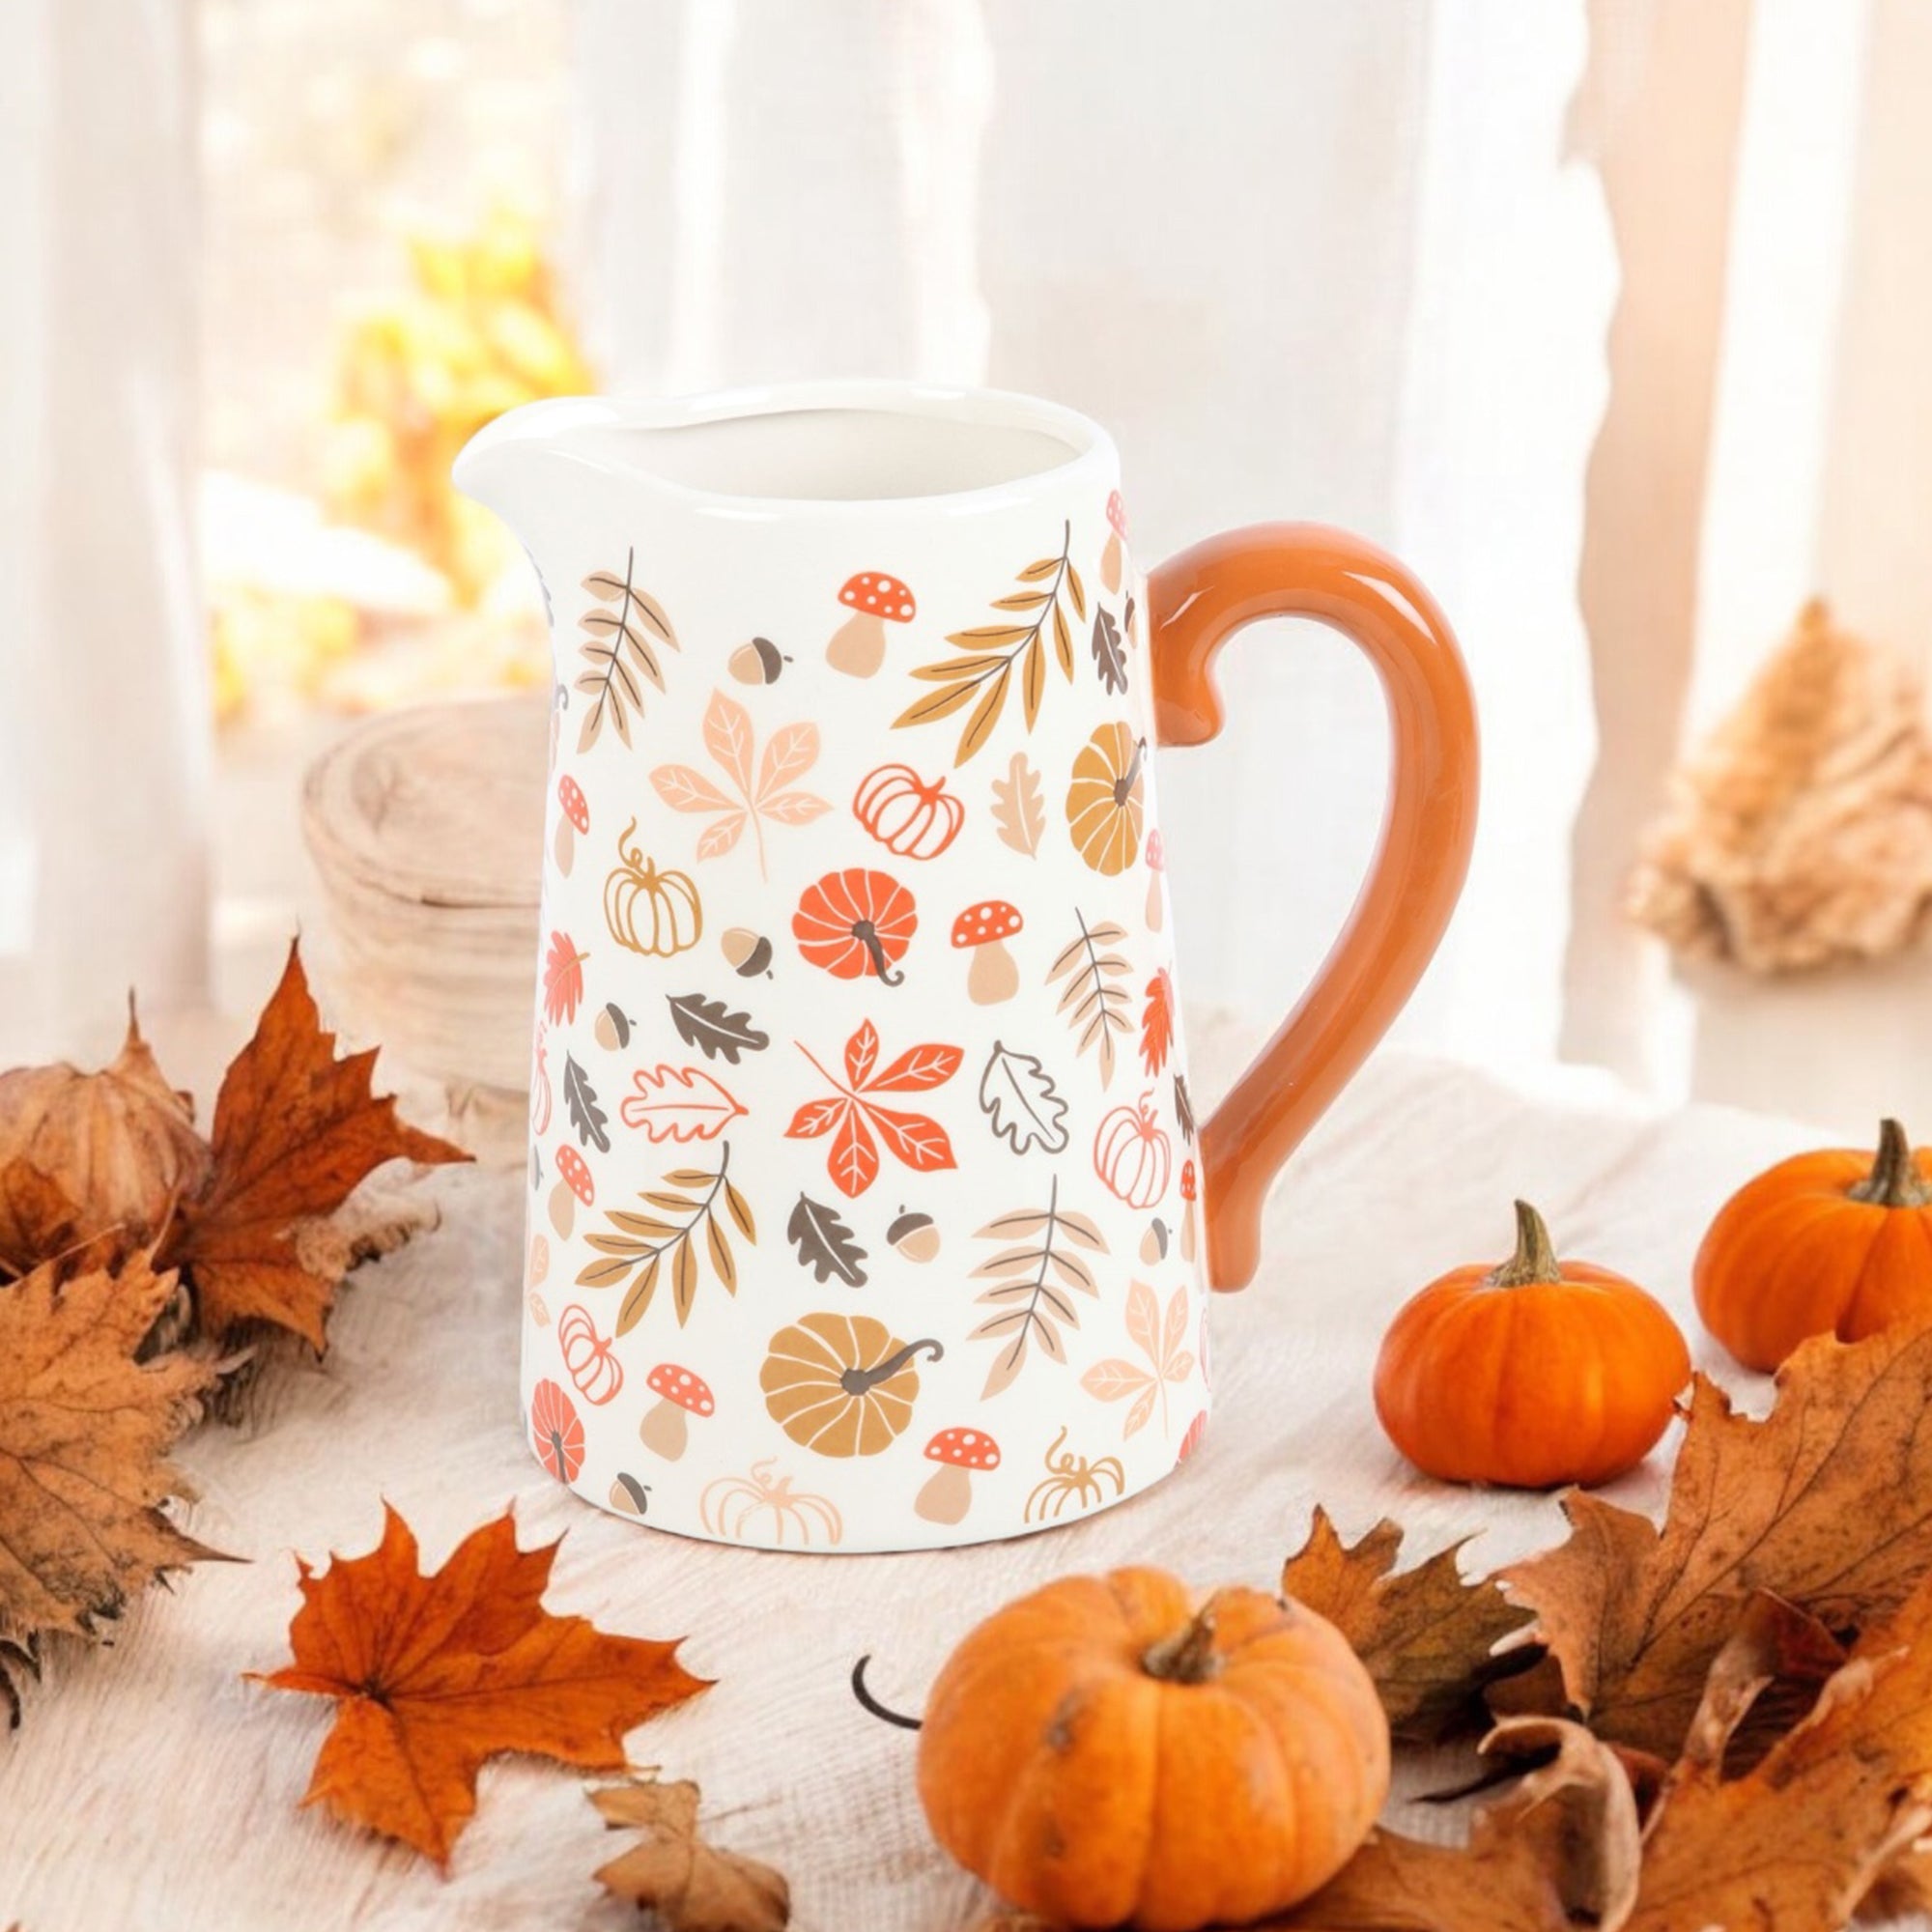 Autumnal Flower Vase with Pumpkins and Leaves - Autumn Flower Jug Vase - Halloween Home Decor